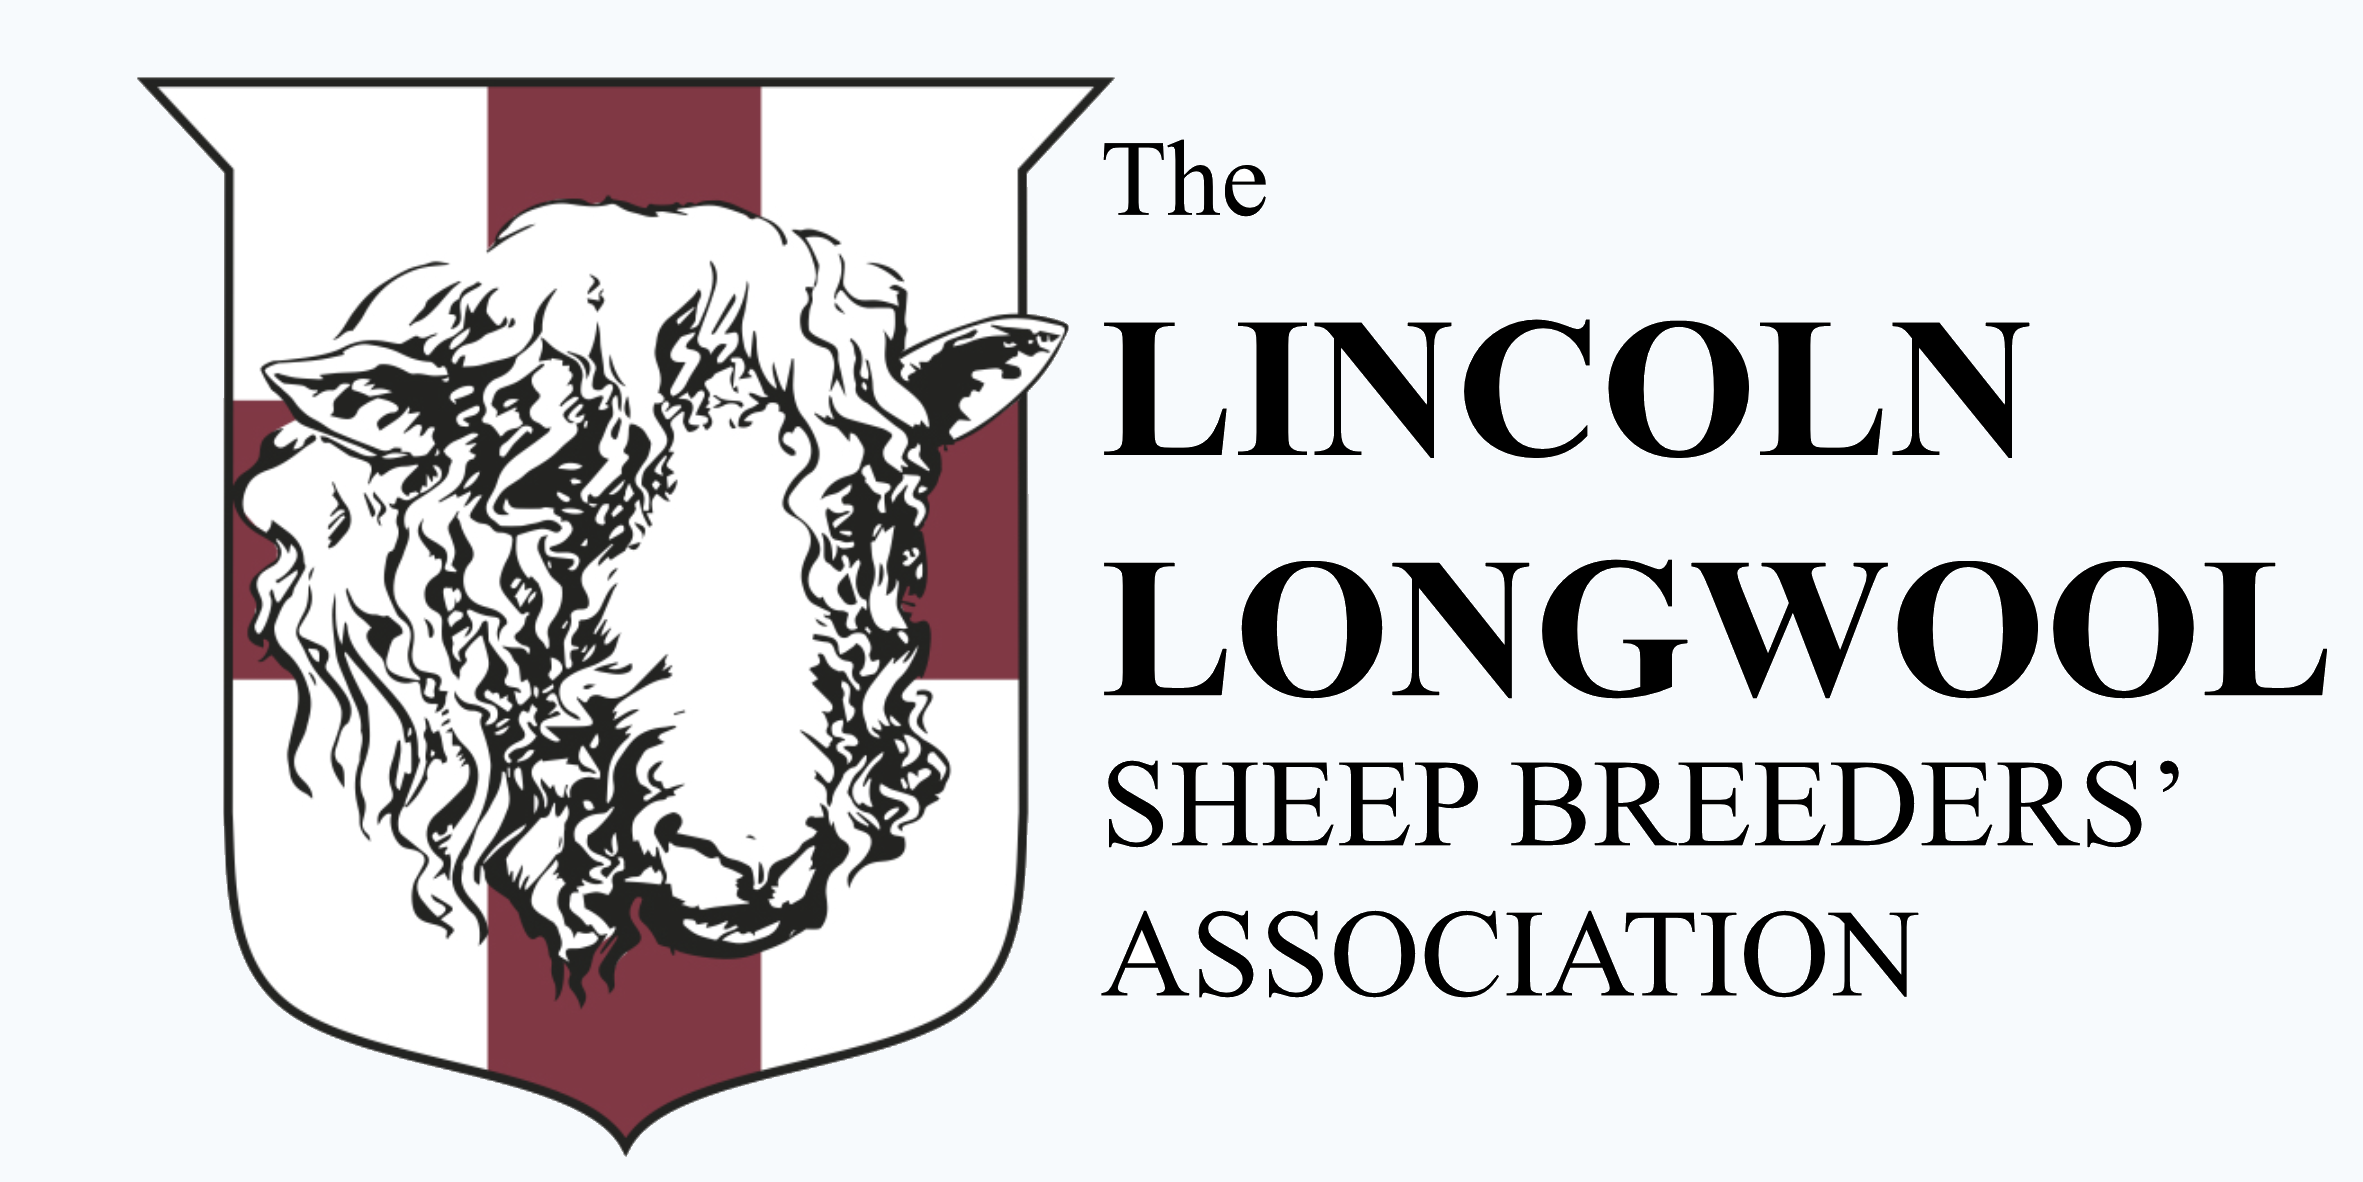 Lincoln Longwools logo